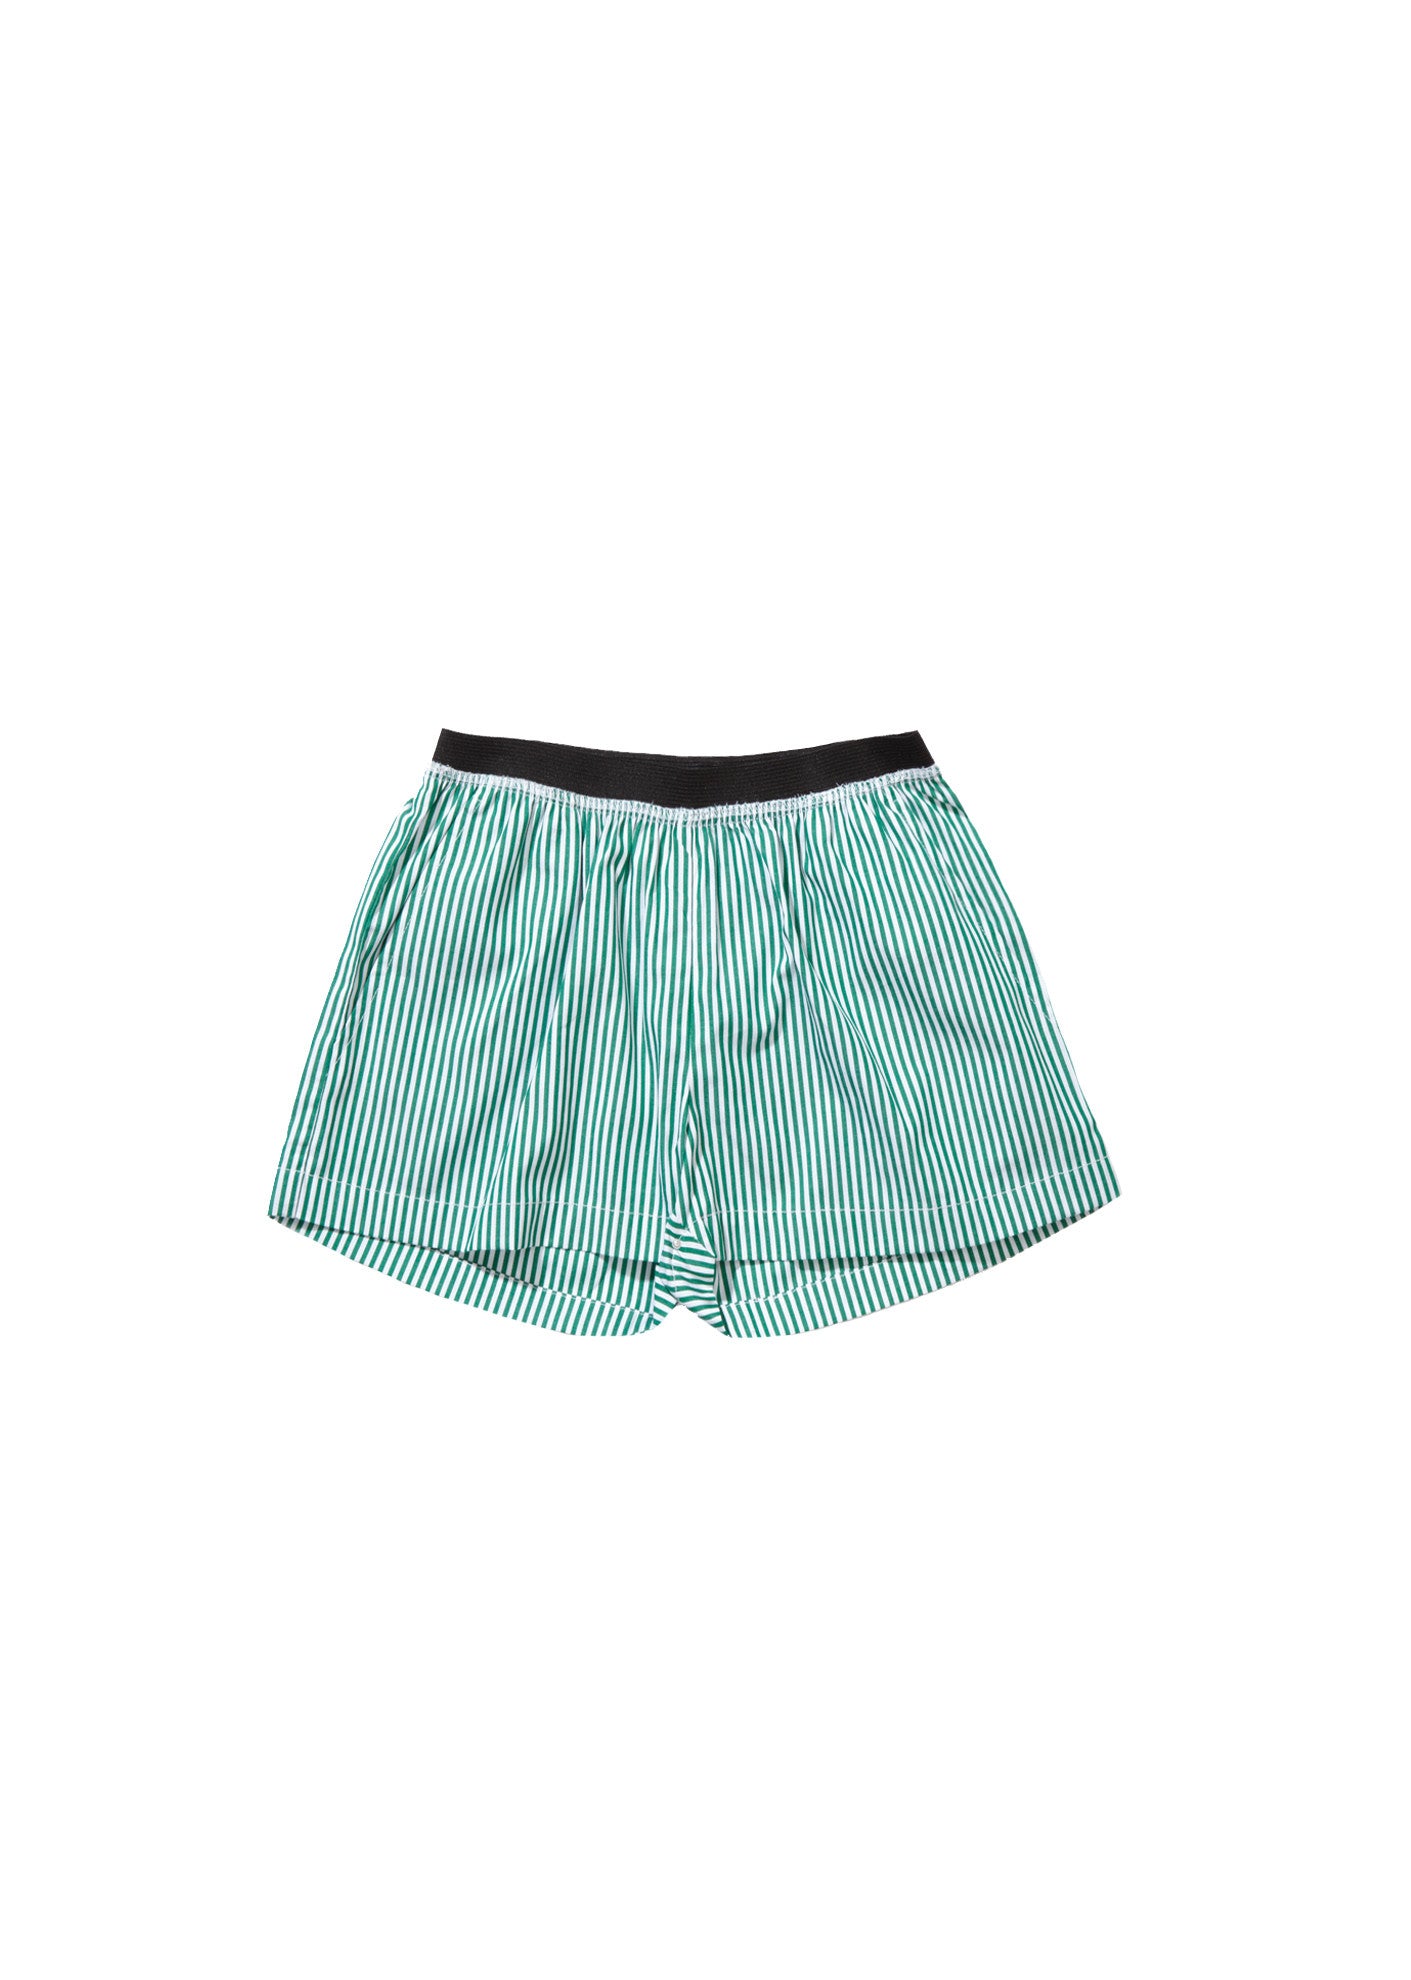 Boys & Girls Green Striped Shorts